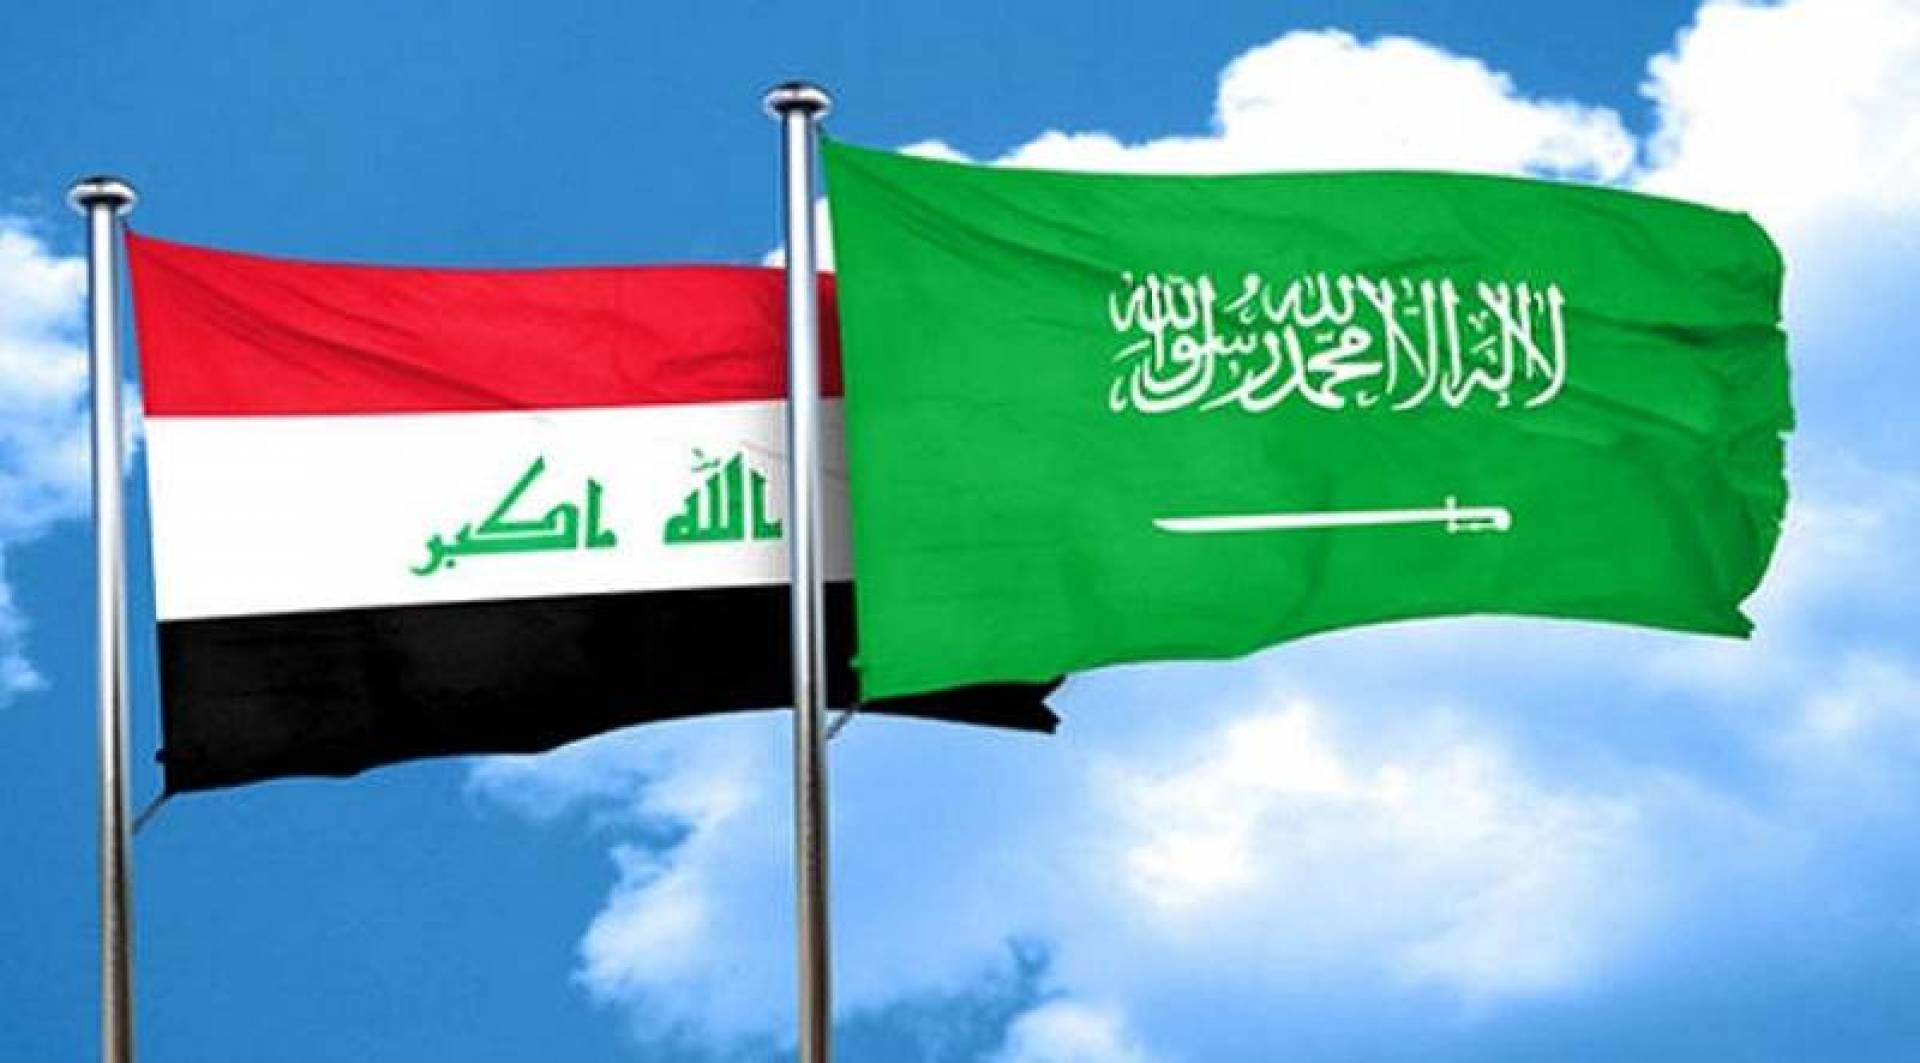 Including Iraq, KSA to invest $24 billion in MENA countries